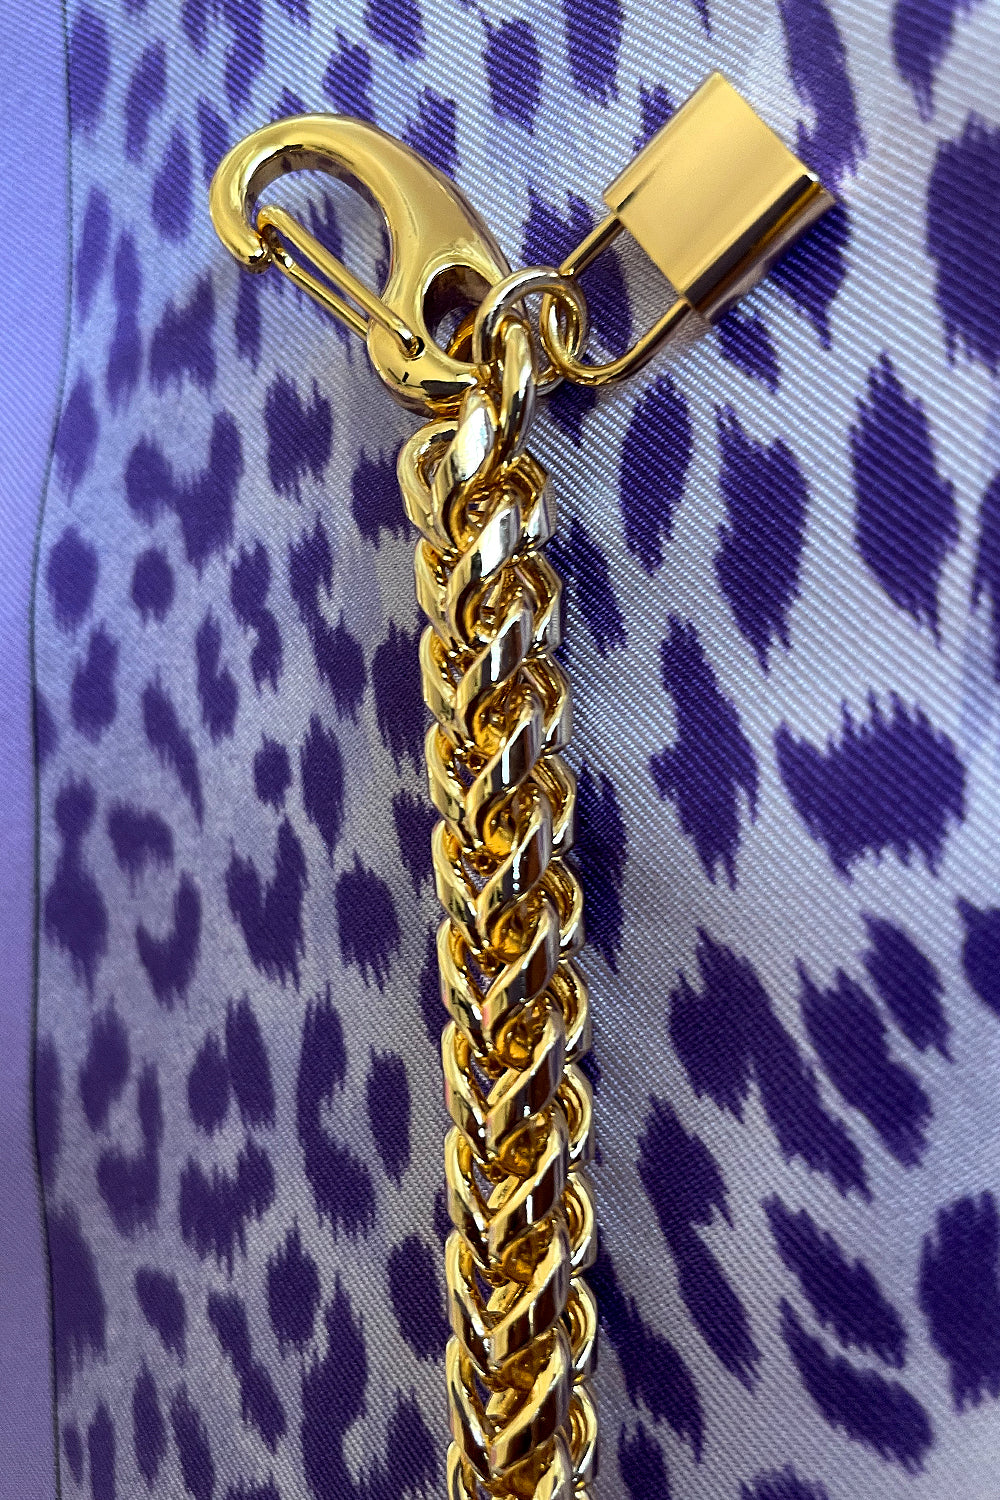 18 Karat Gold Plated Roman Rope Chain - Slick It Up 